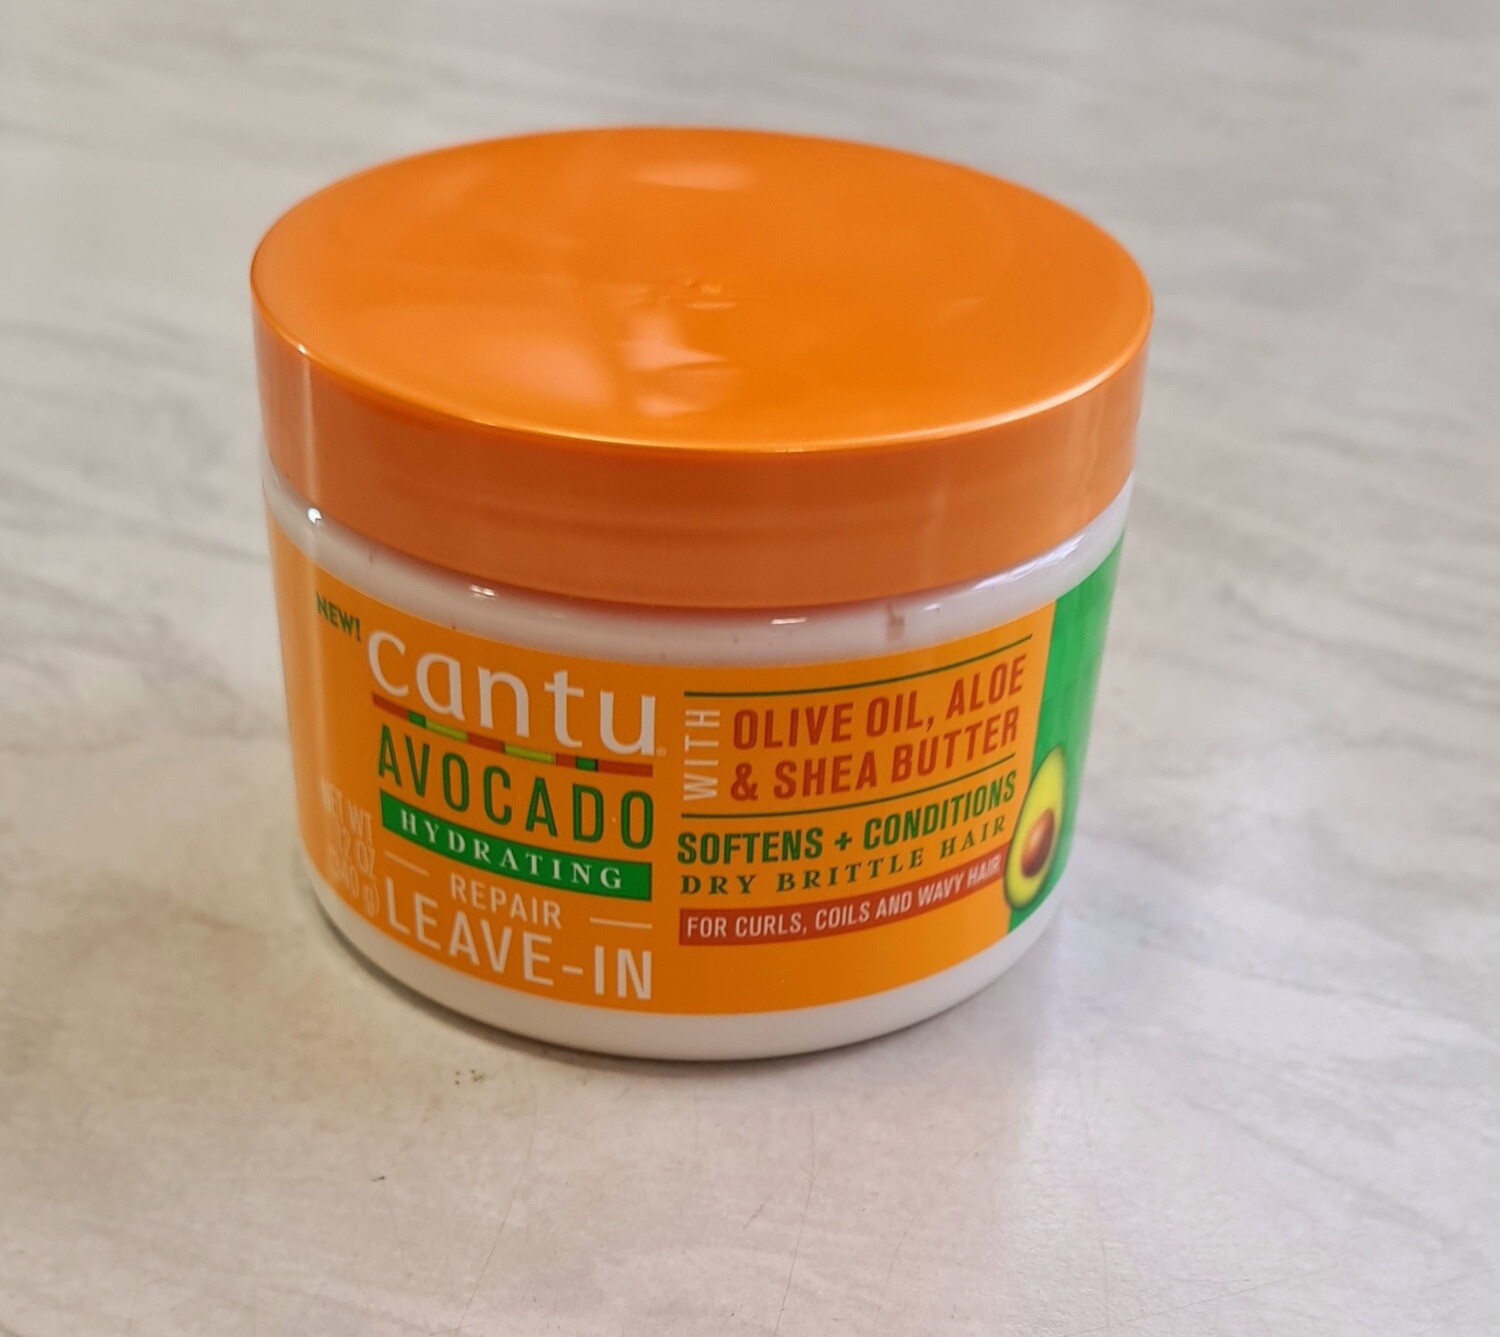 CANTU AVOCADO Hair REPAIR LEAVE-IN 12 oz